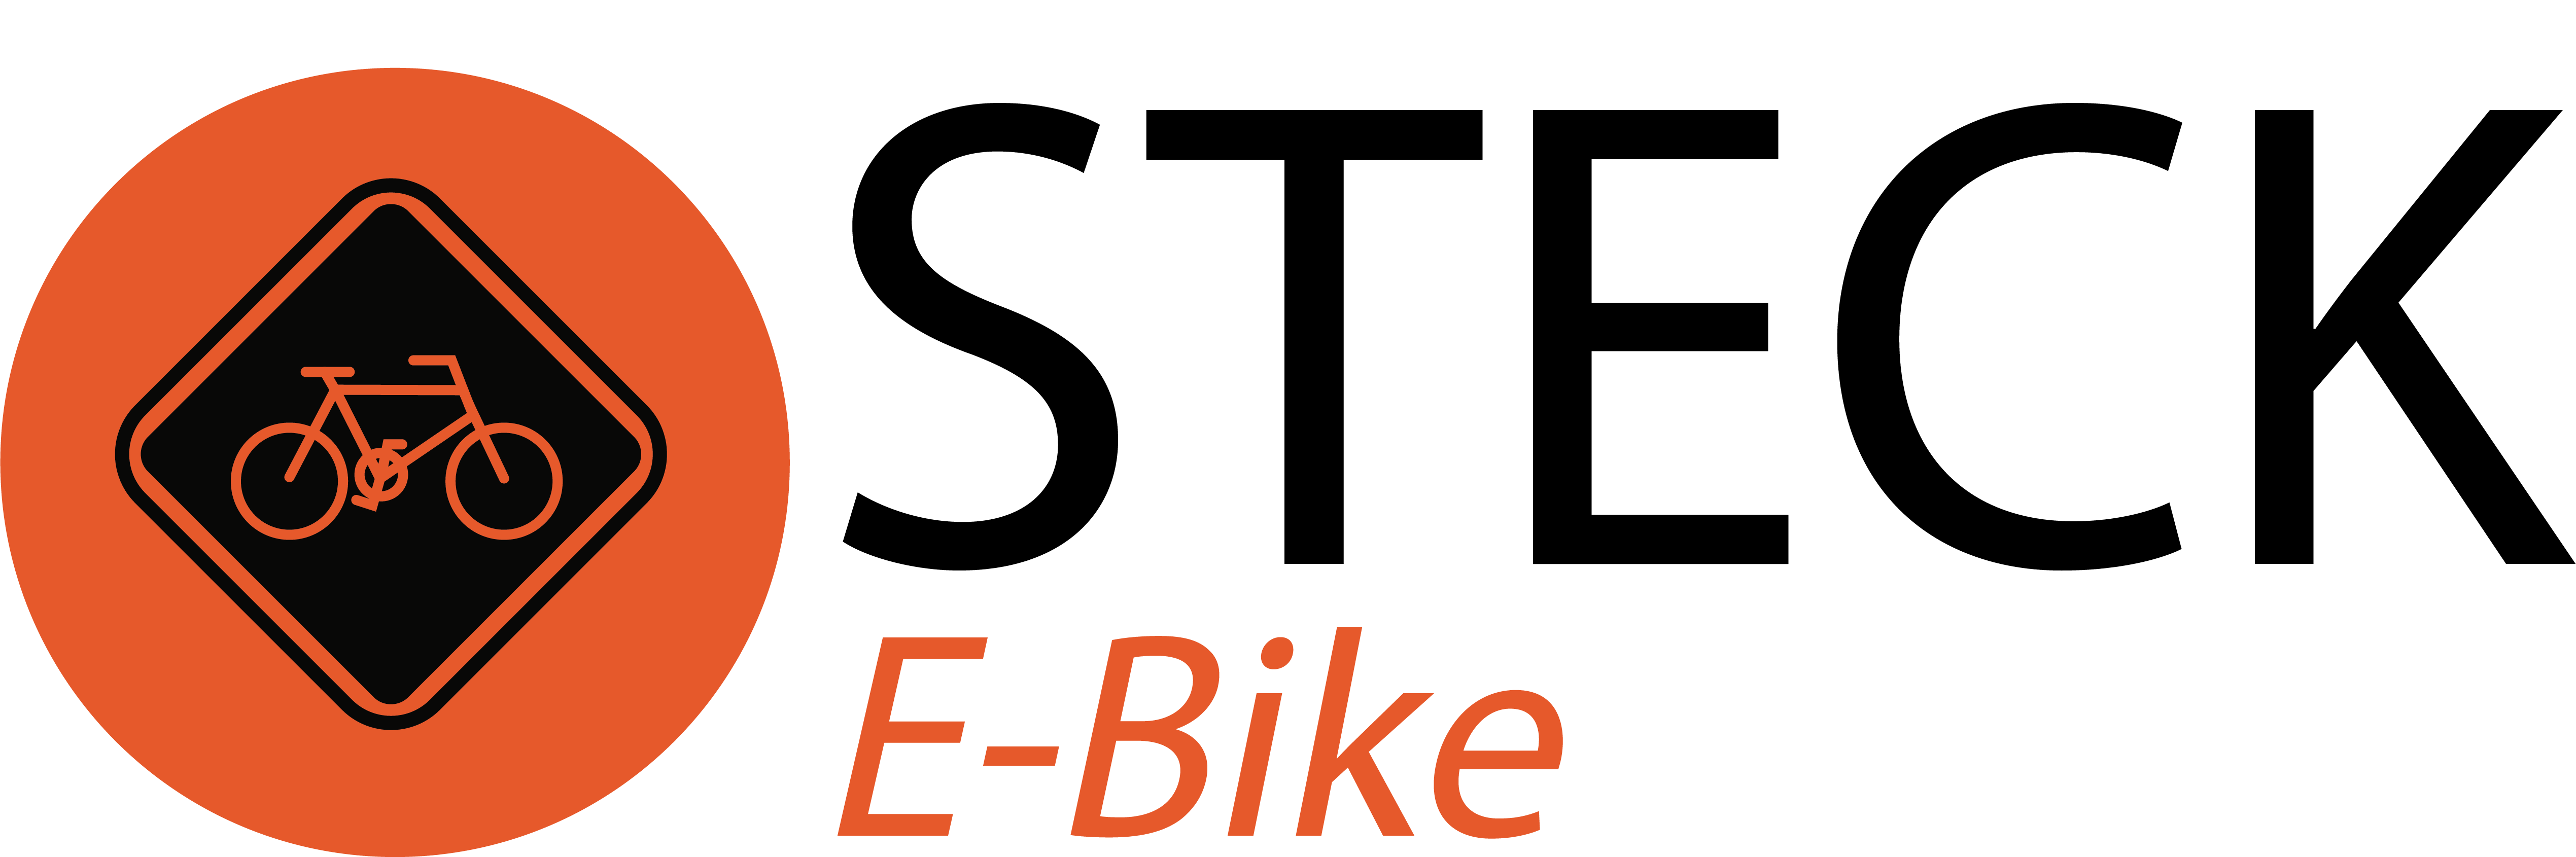 Steck E-Bike